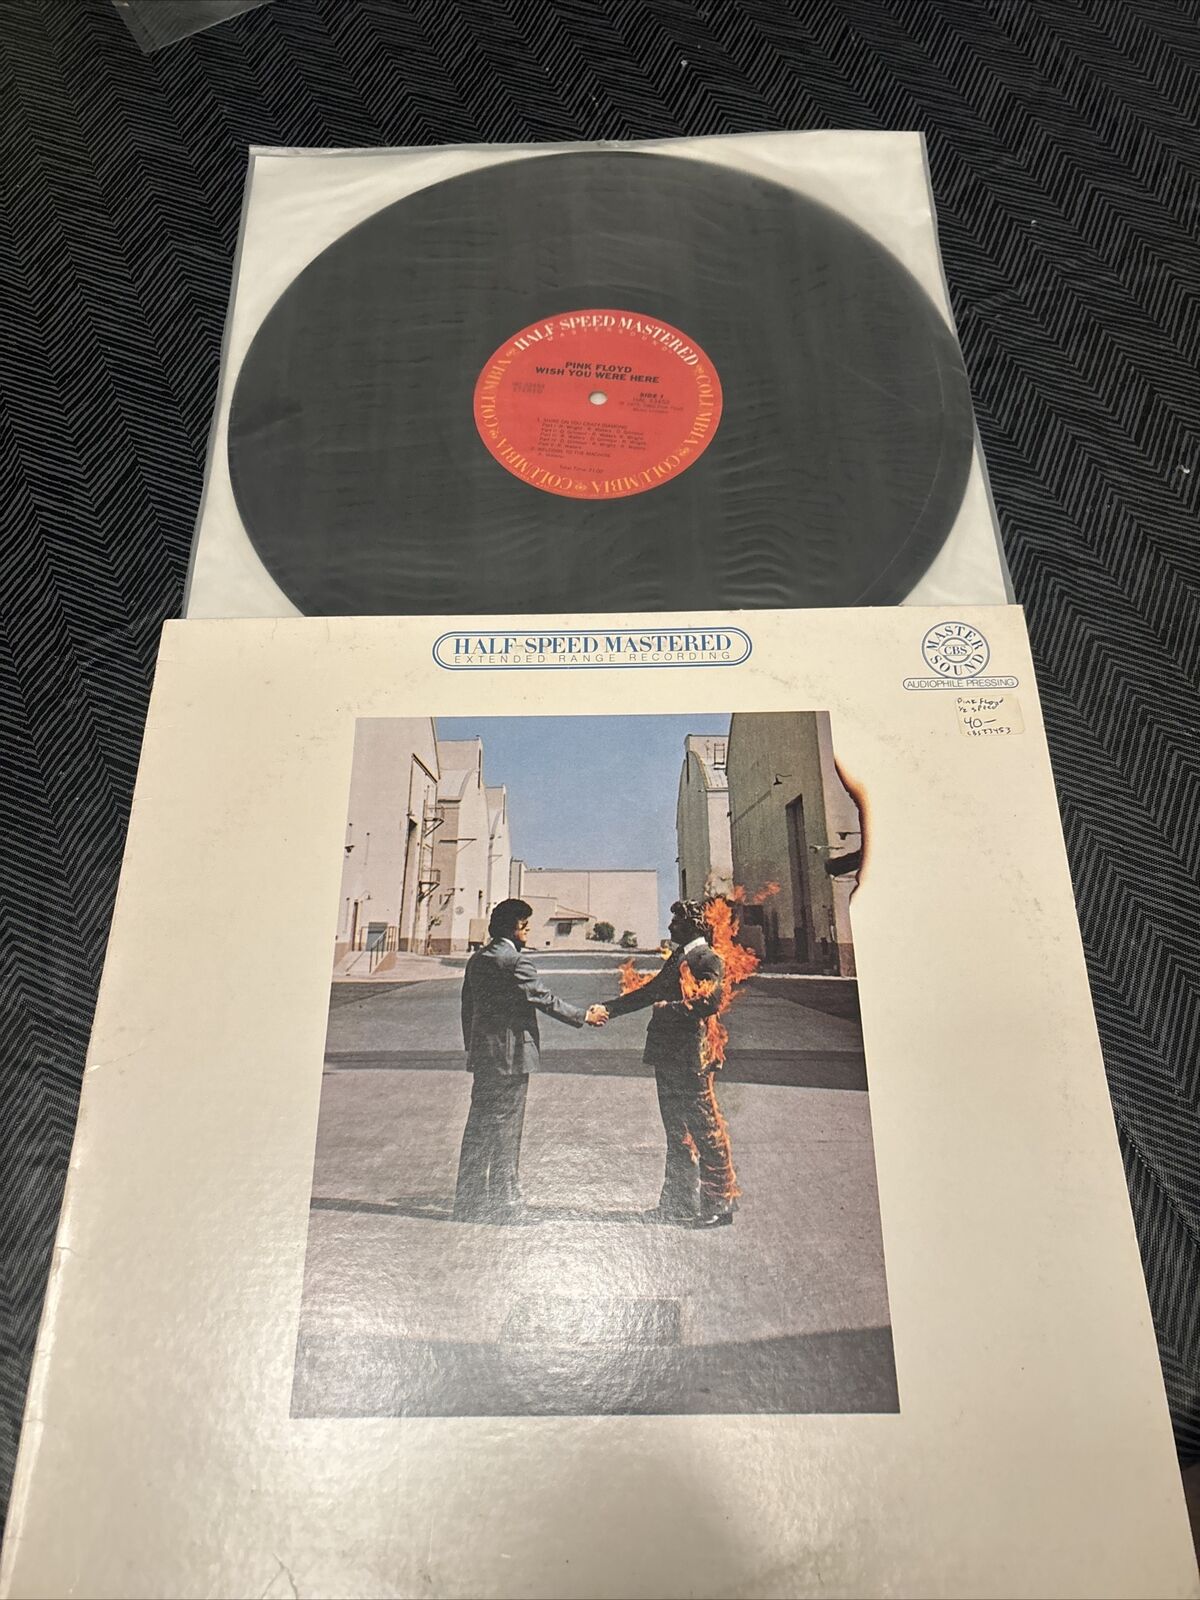 PINK FLOYD Wish You Were Here Vinyl Record HC-33453 Half Speed Mastered 1980 Lp